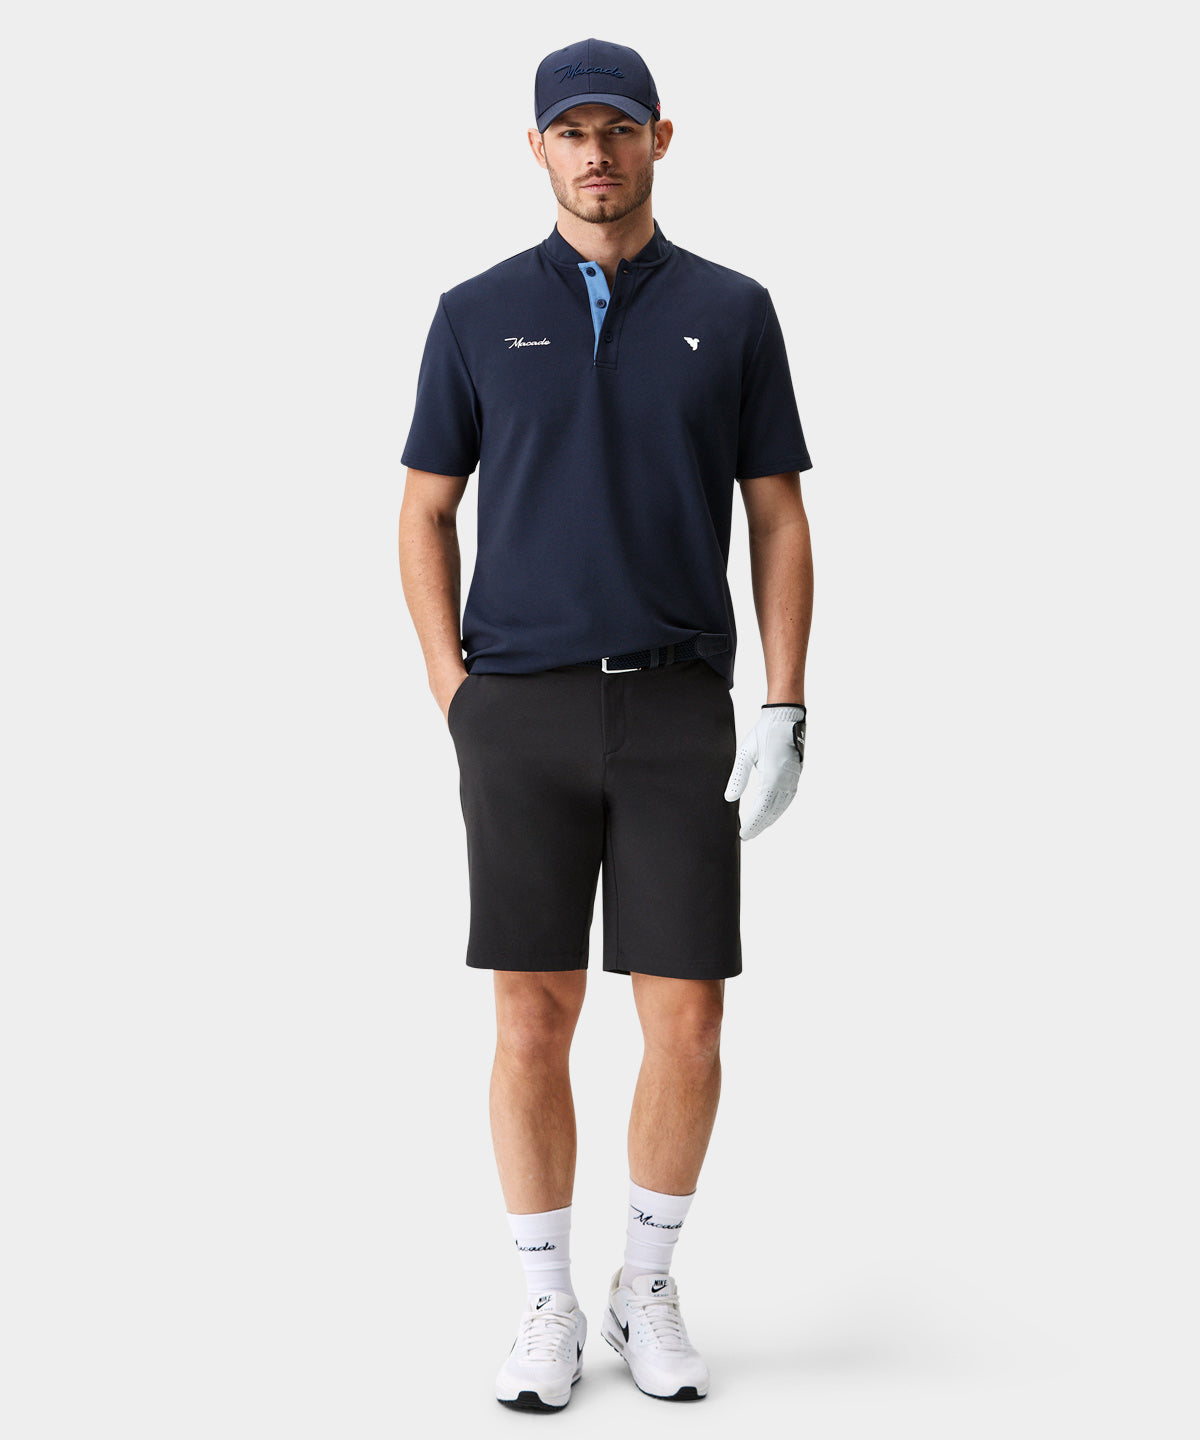 Heath Black Bomber Shirt - Macade Golf